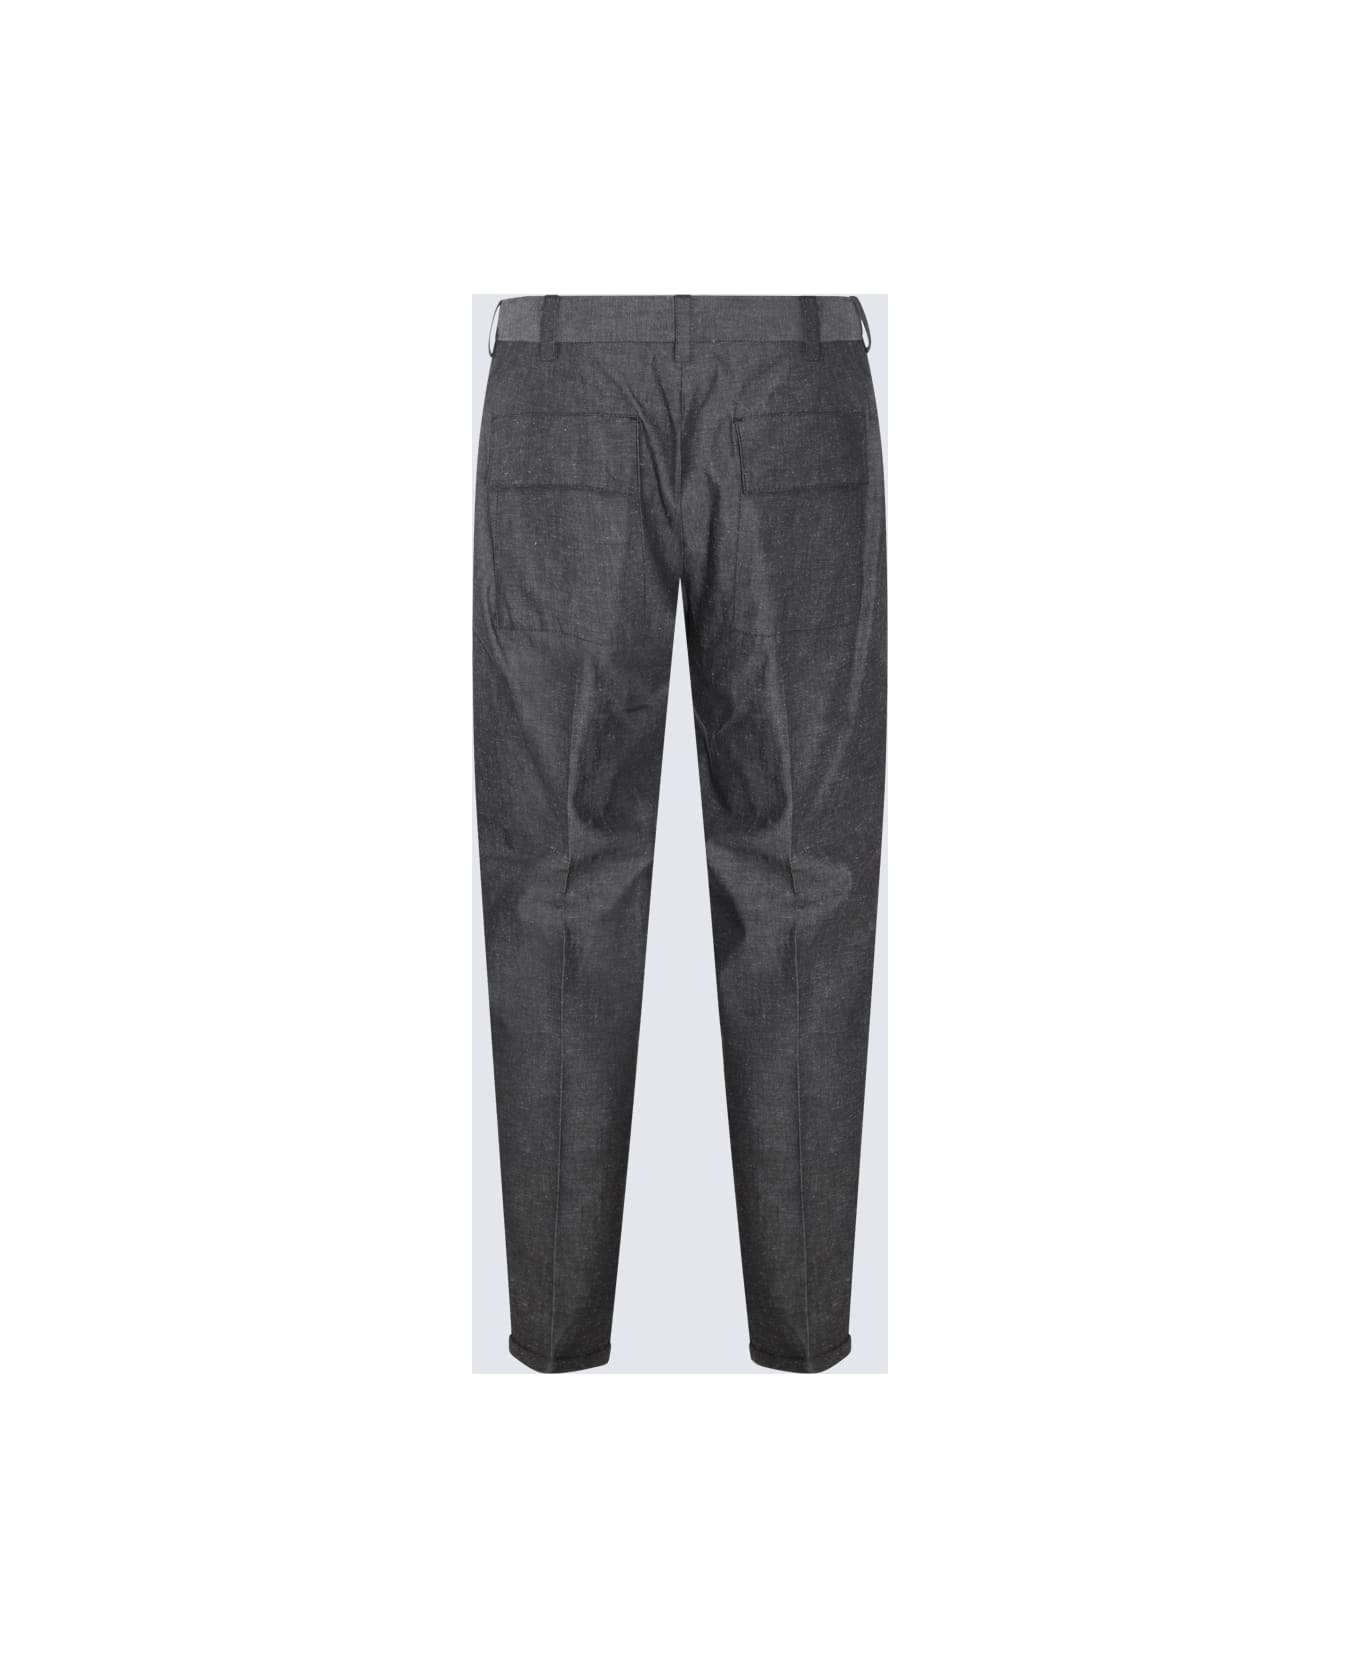 PT Torino Grey Cotton Pants - Black